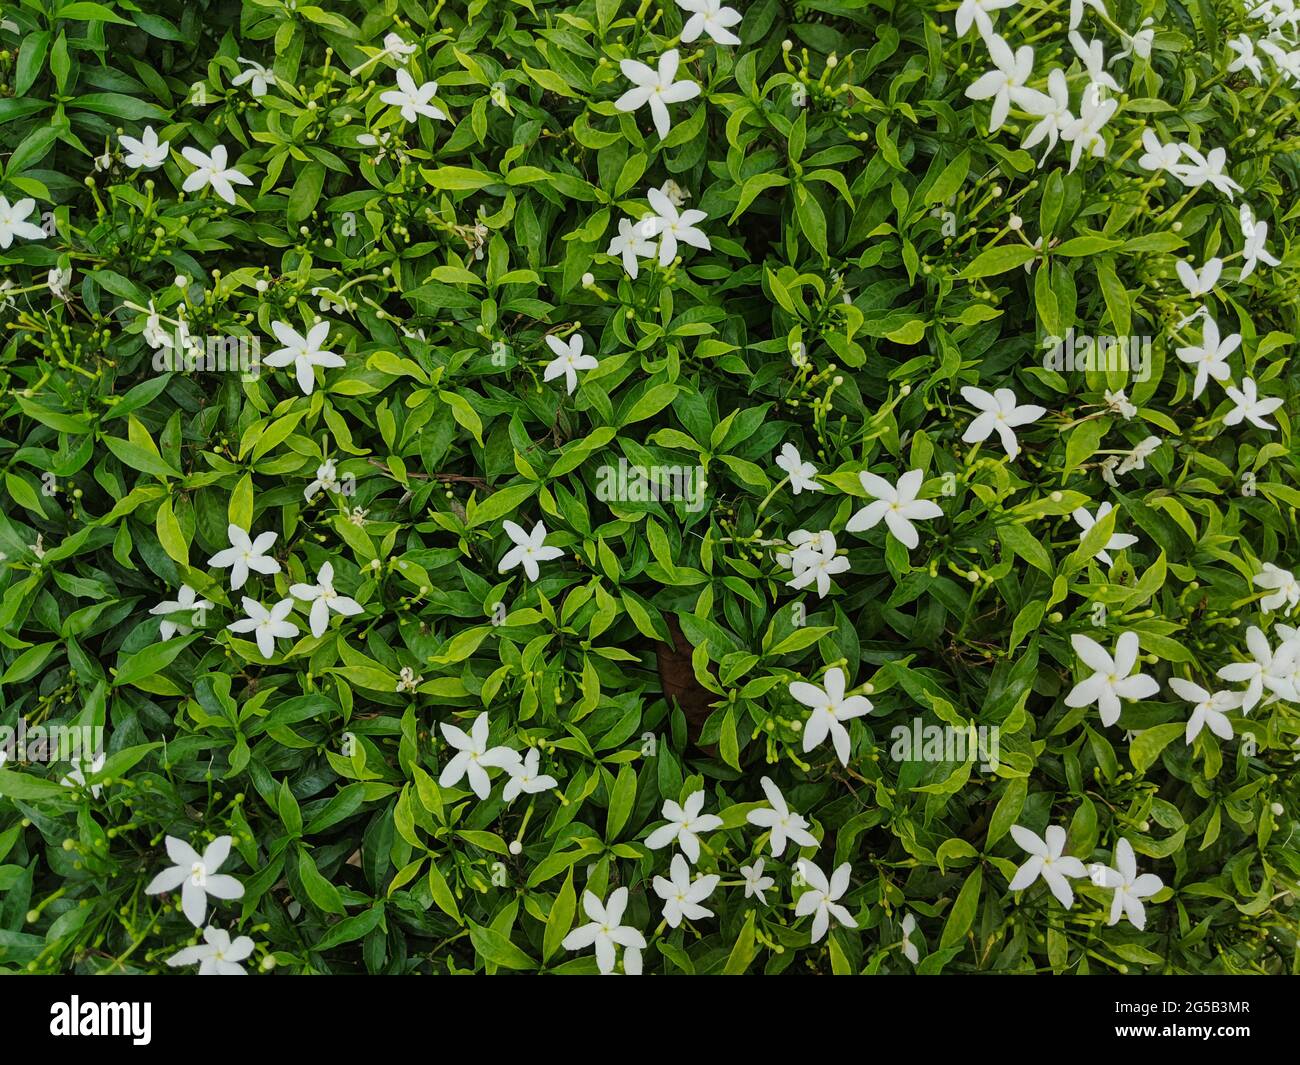 Green shrub of pinwheel flowers blooming in the garden Stock Photo